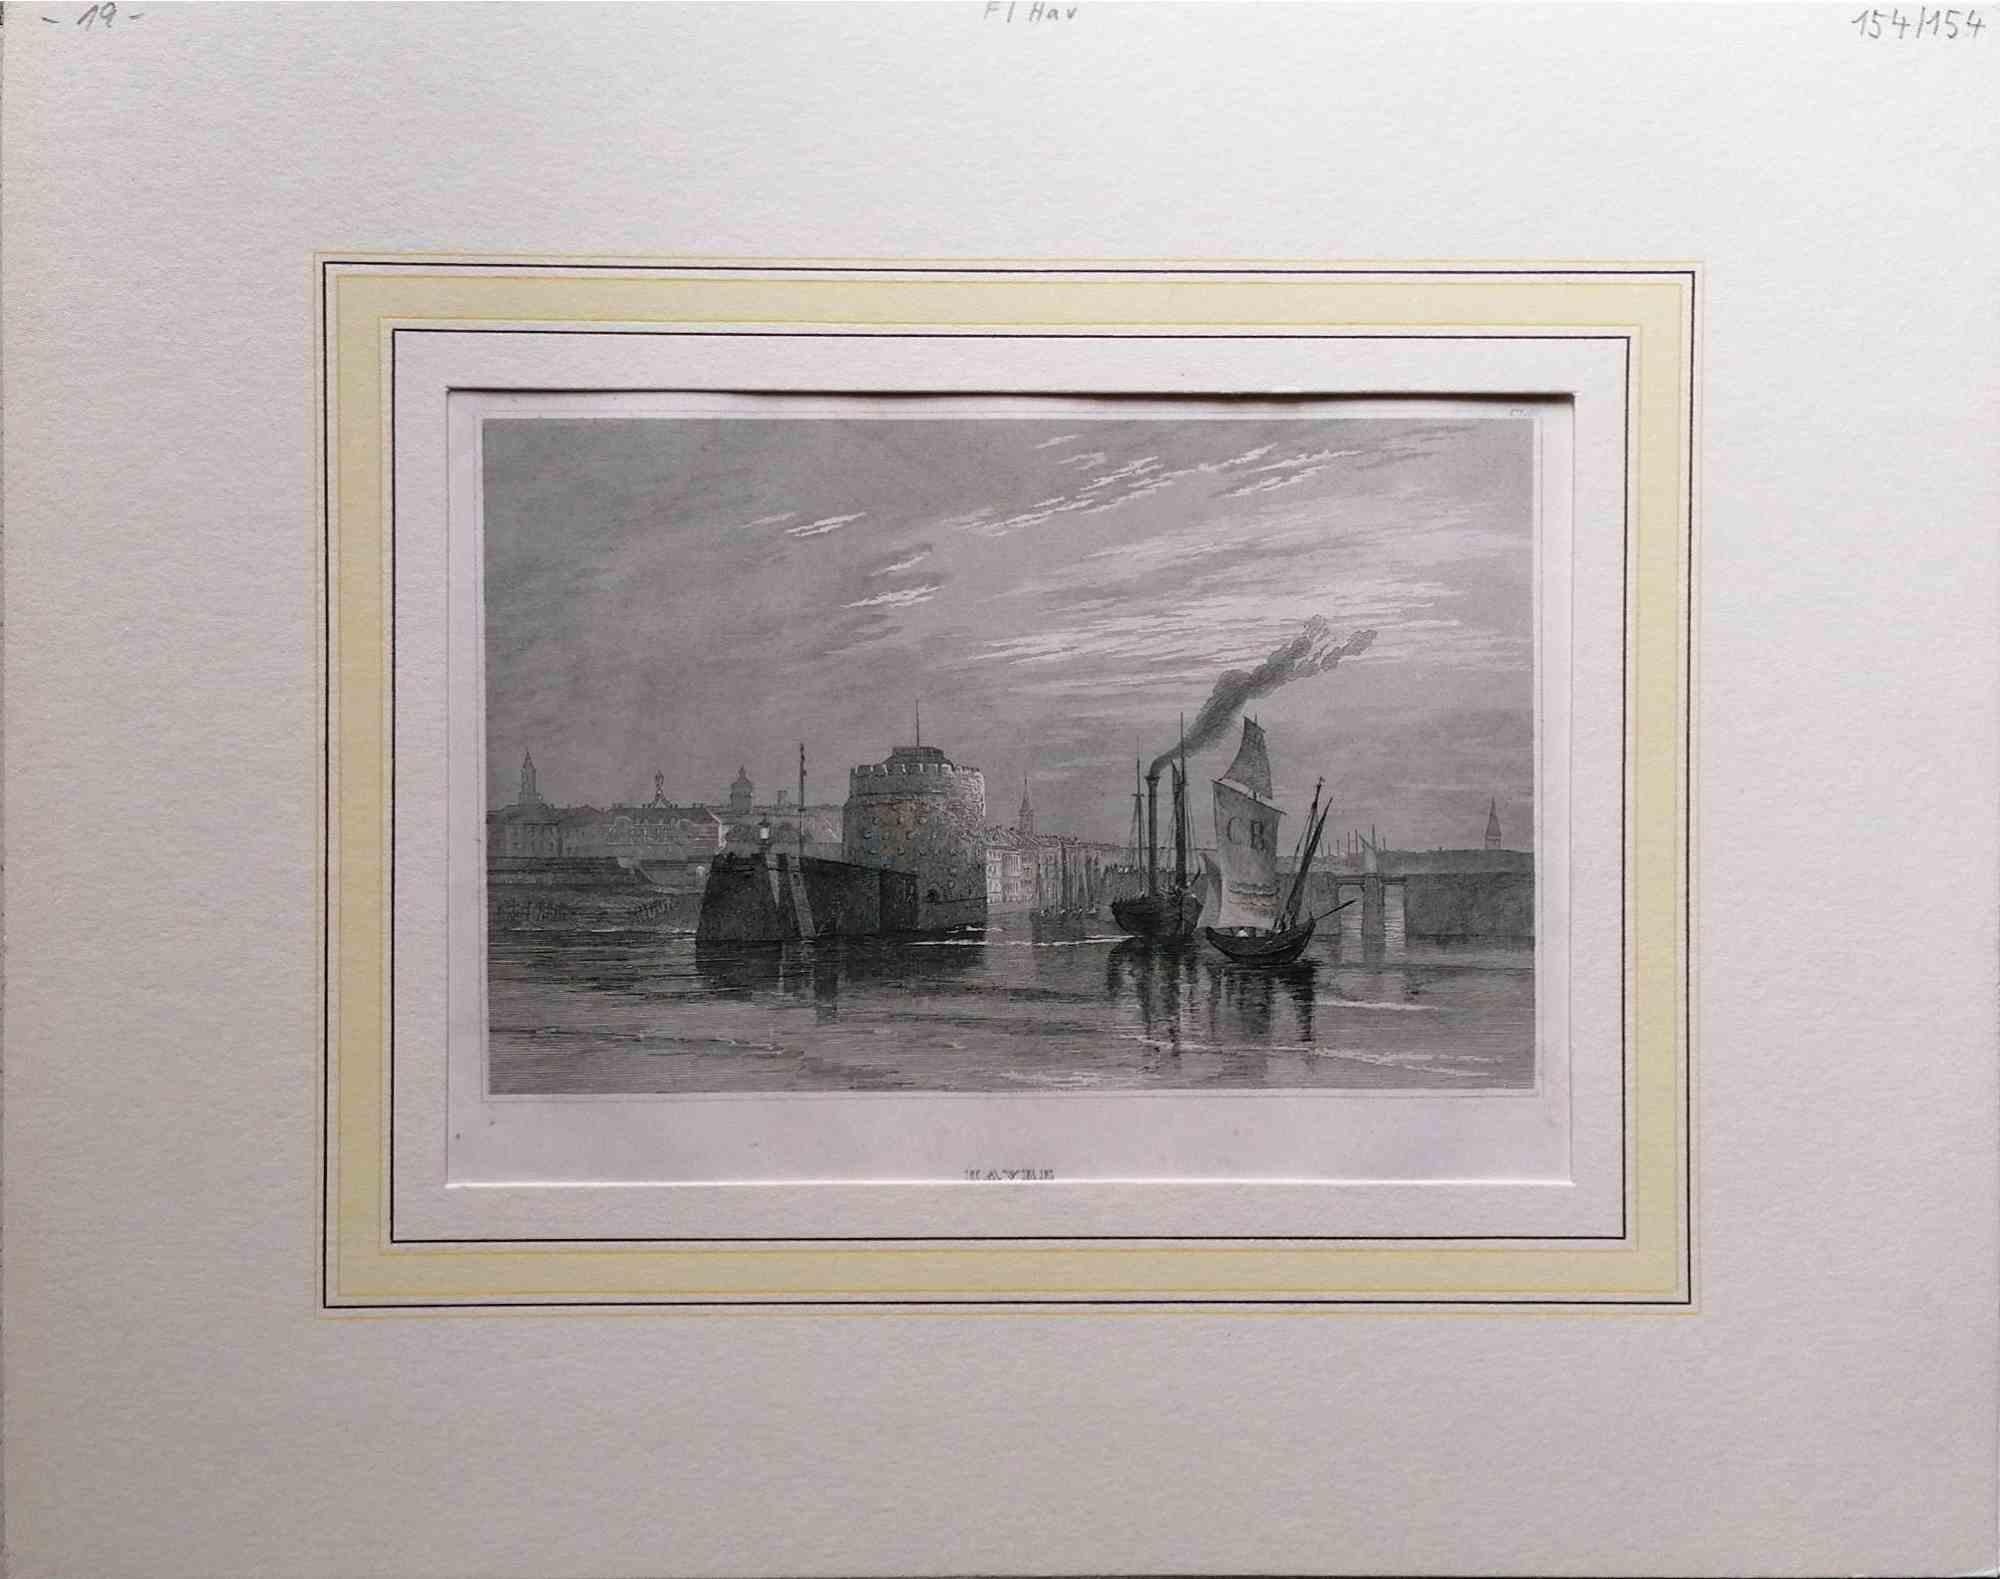 Unknown Landscape Print - Havre - Original Lithograph - Mid-19th Century